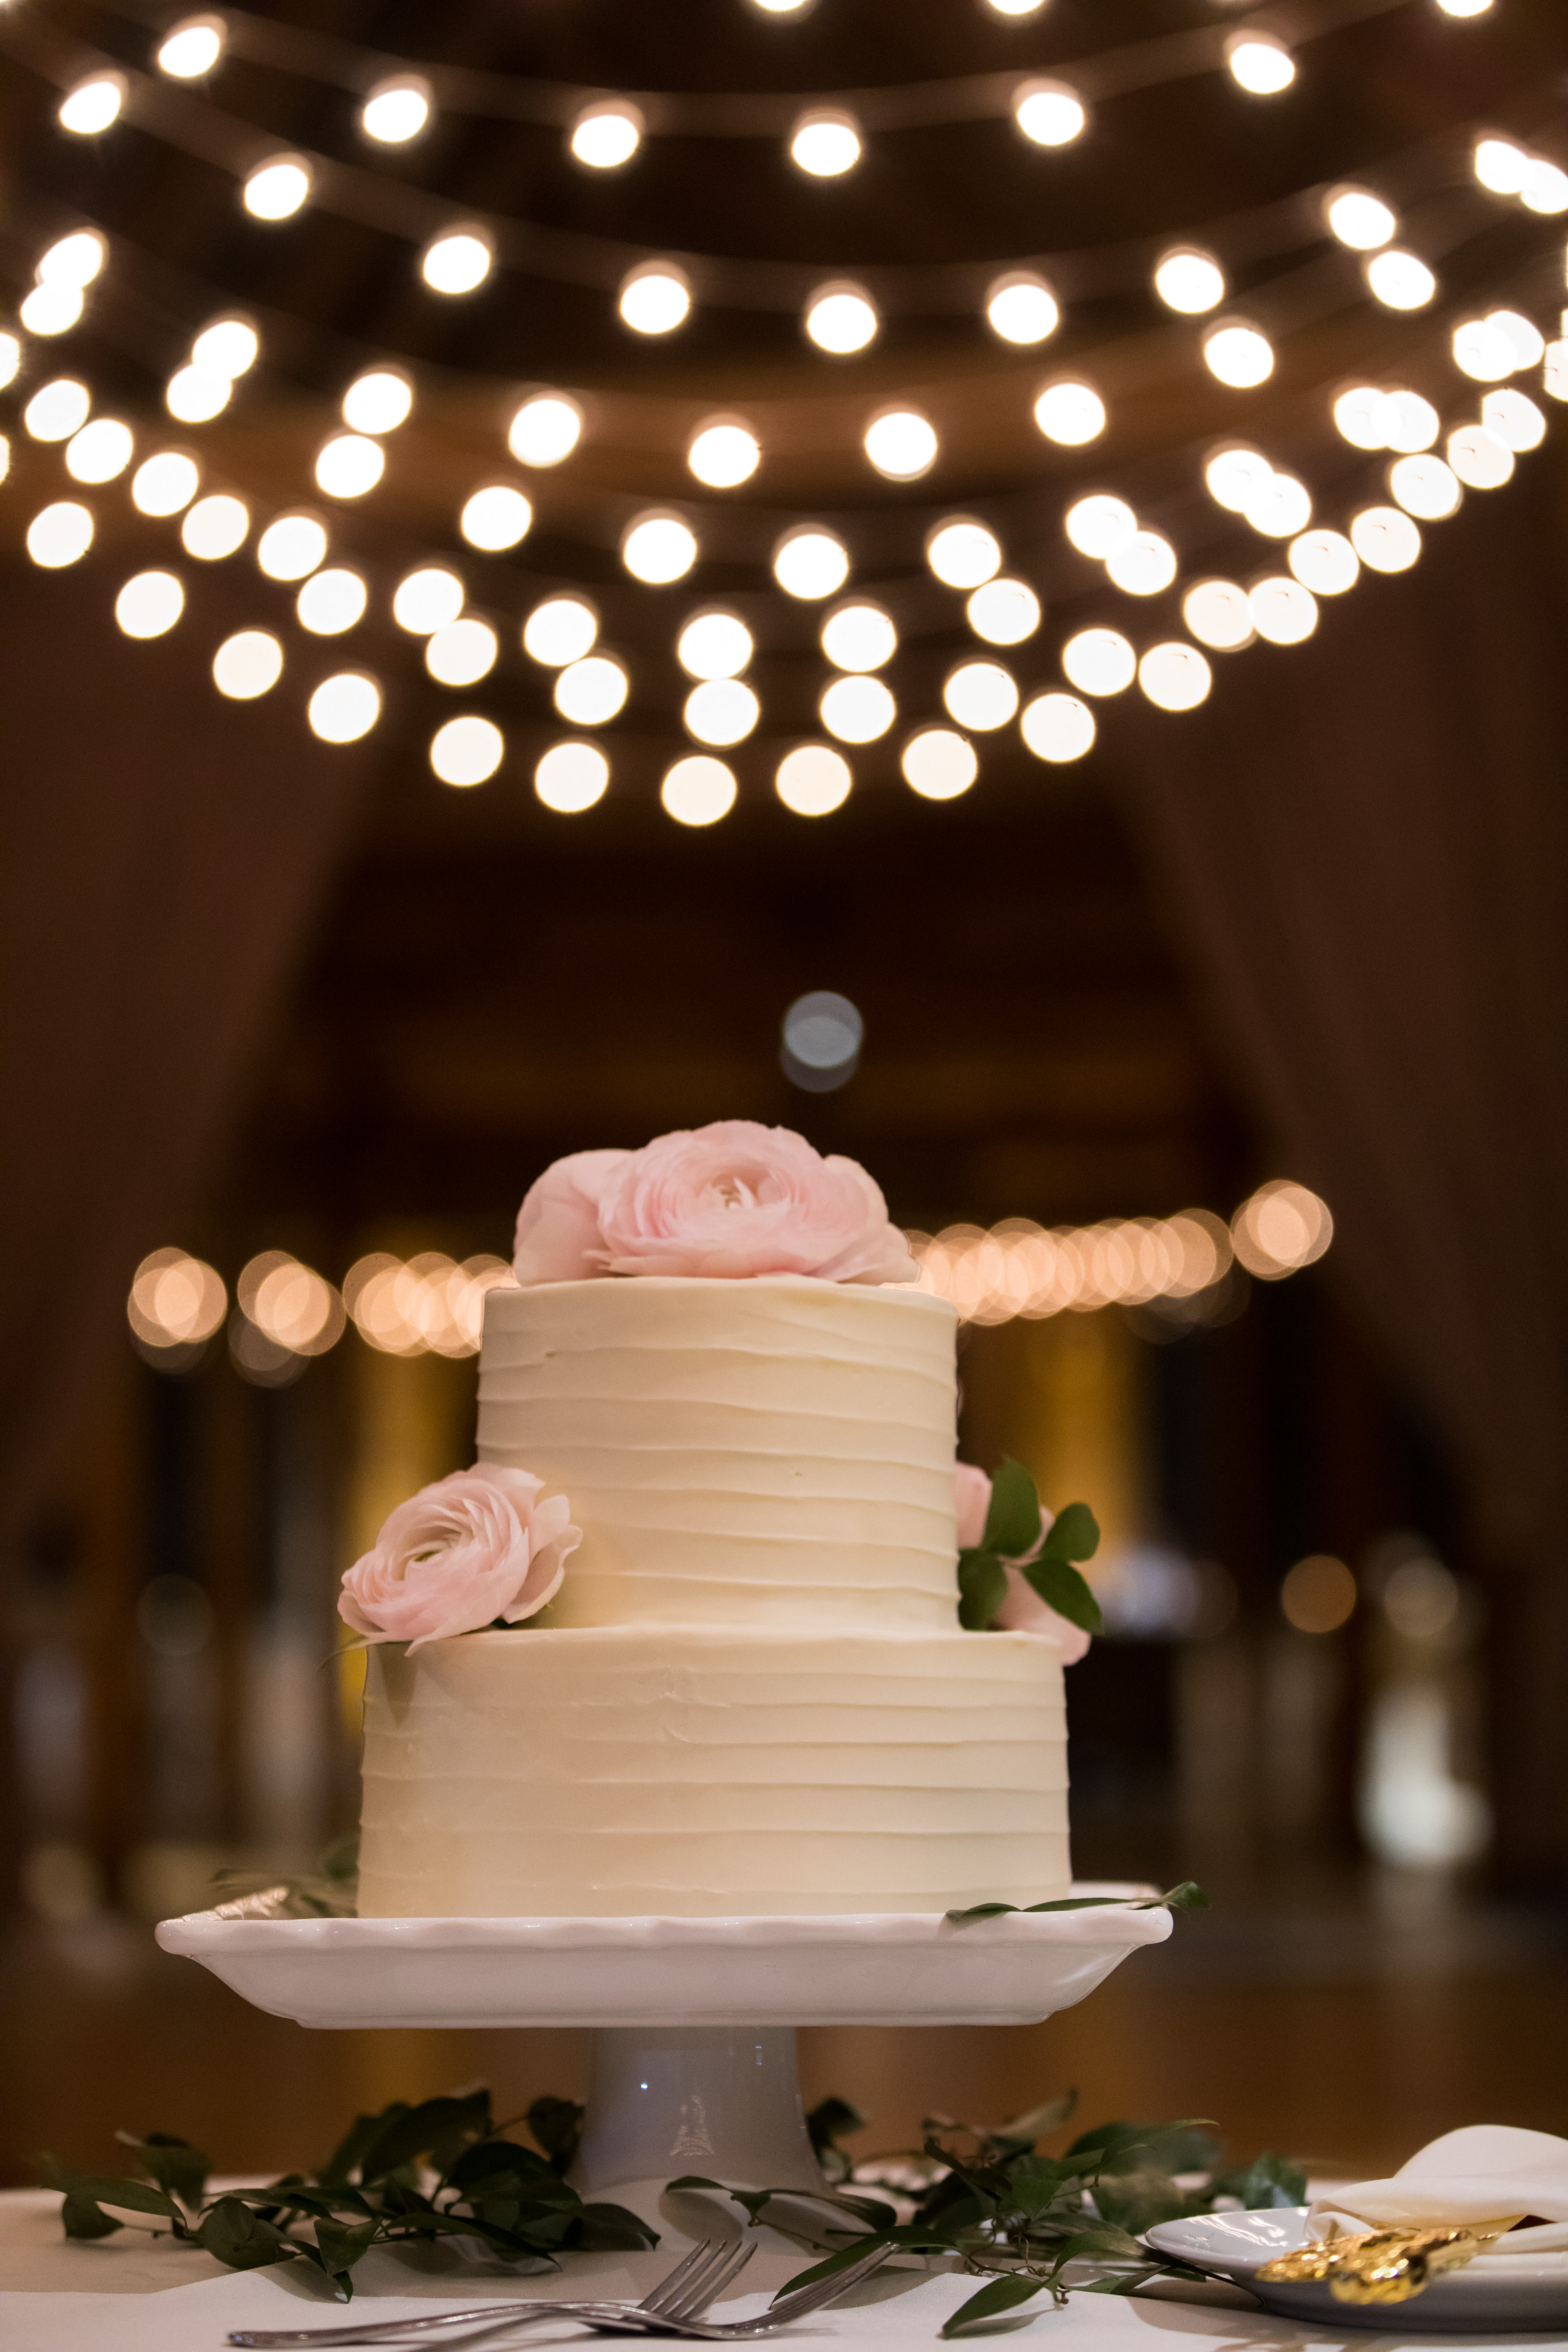 Winter wedding cake with blush Hanoi ranunculus and string lights at Bridgeport Art Center Skyline Loft.